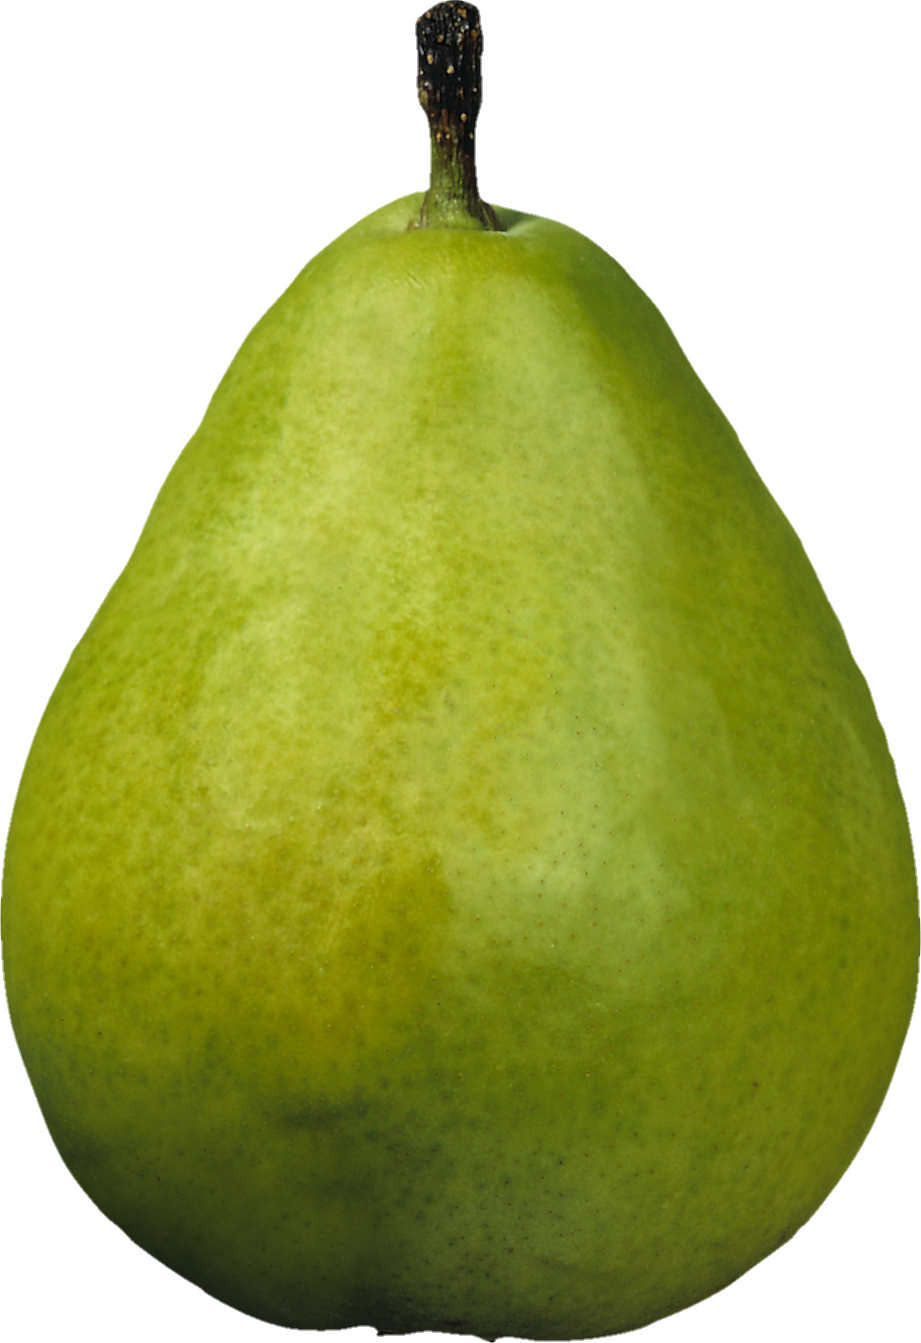 pear-8-1